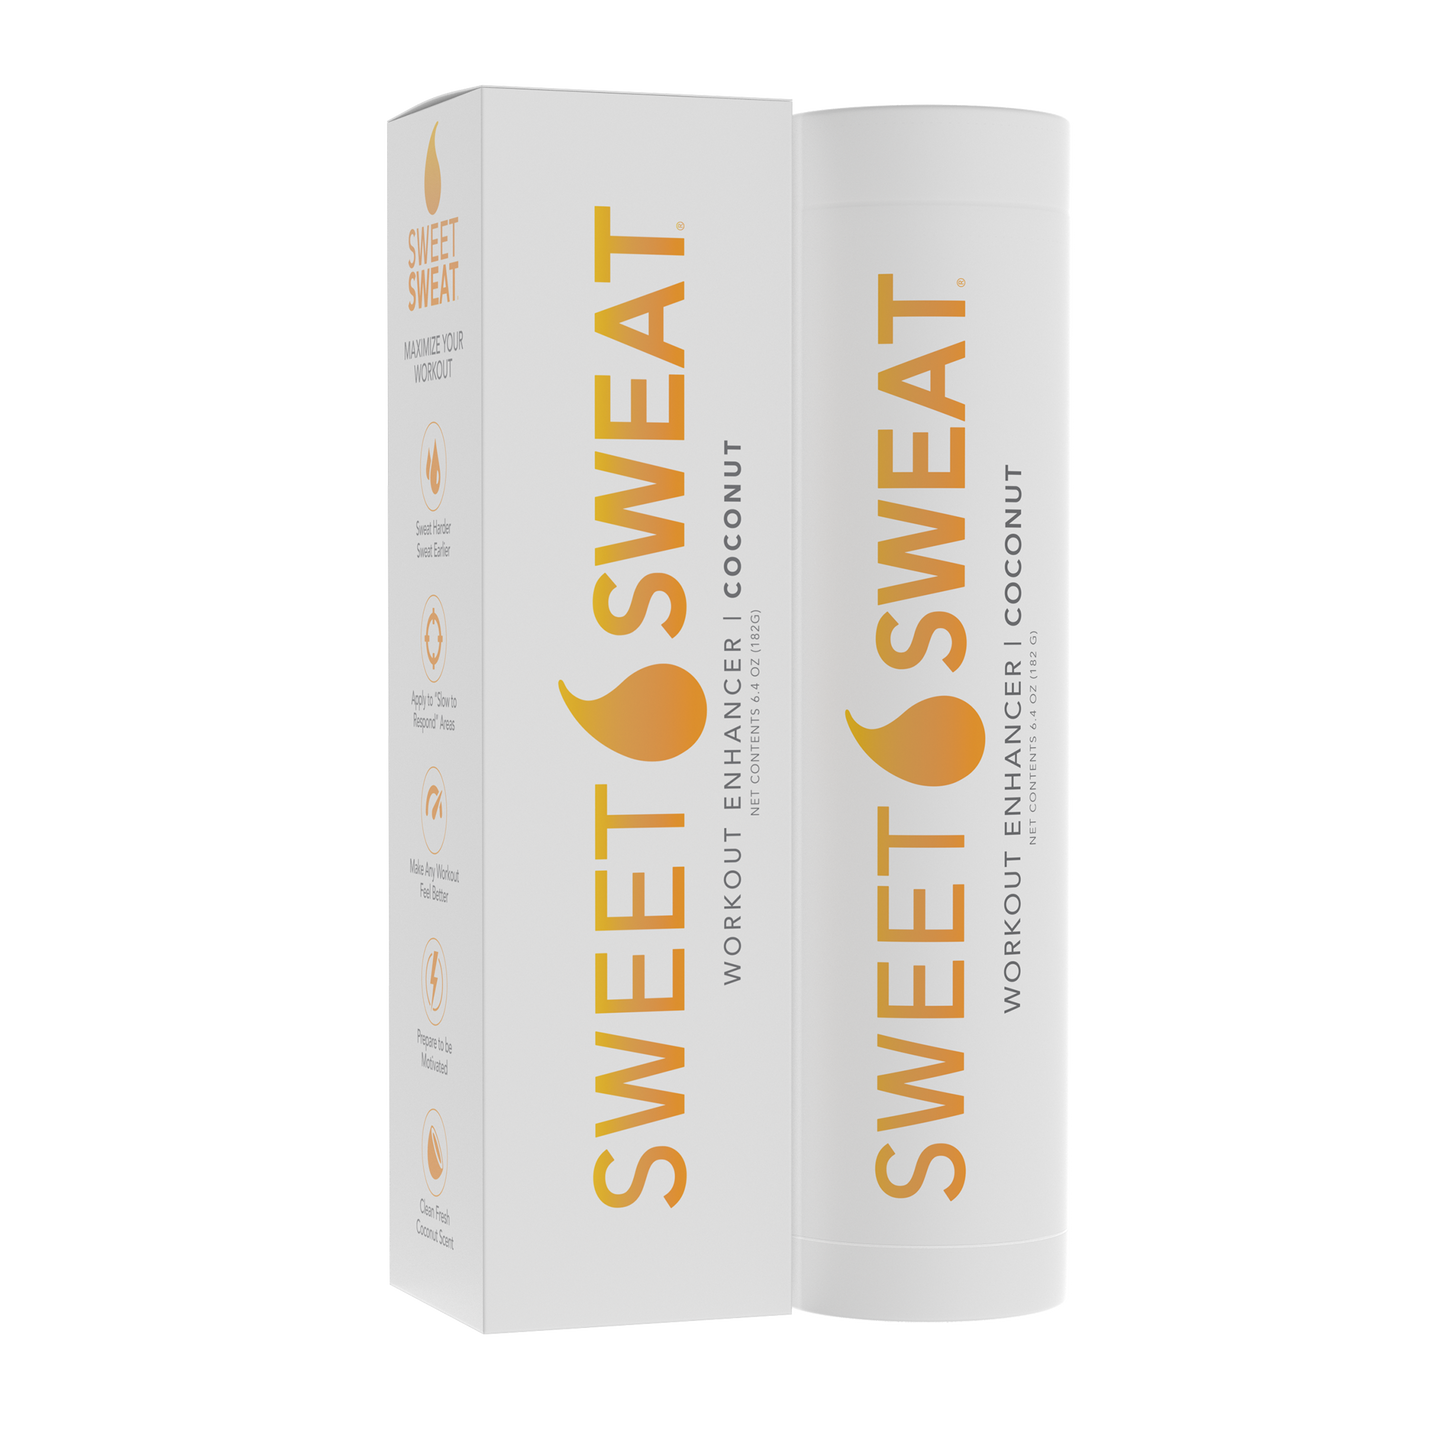 A box of Sweet Sweat® Stick 6.4 oz - Coconut lip balm on a white background.